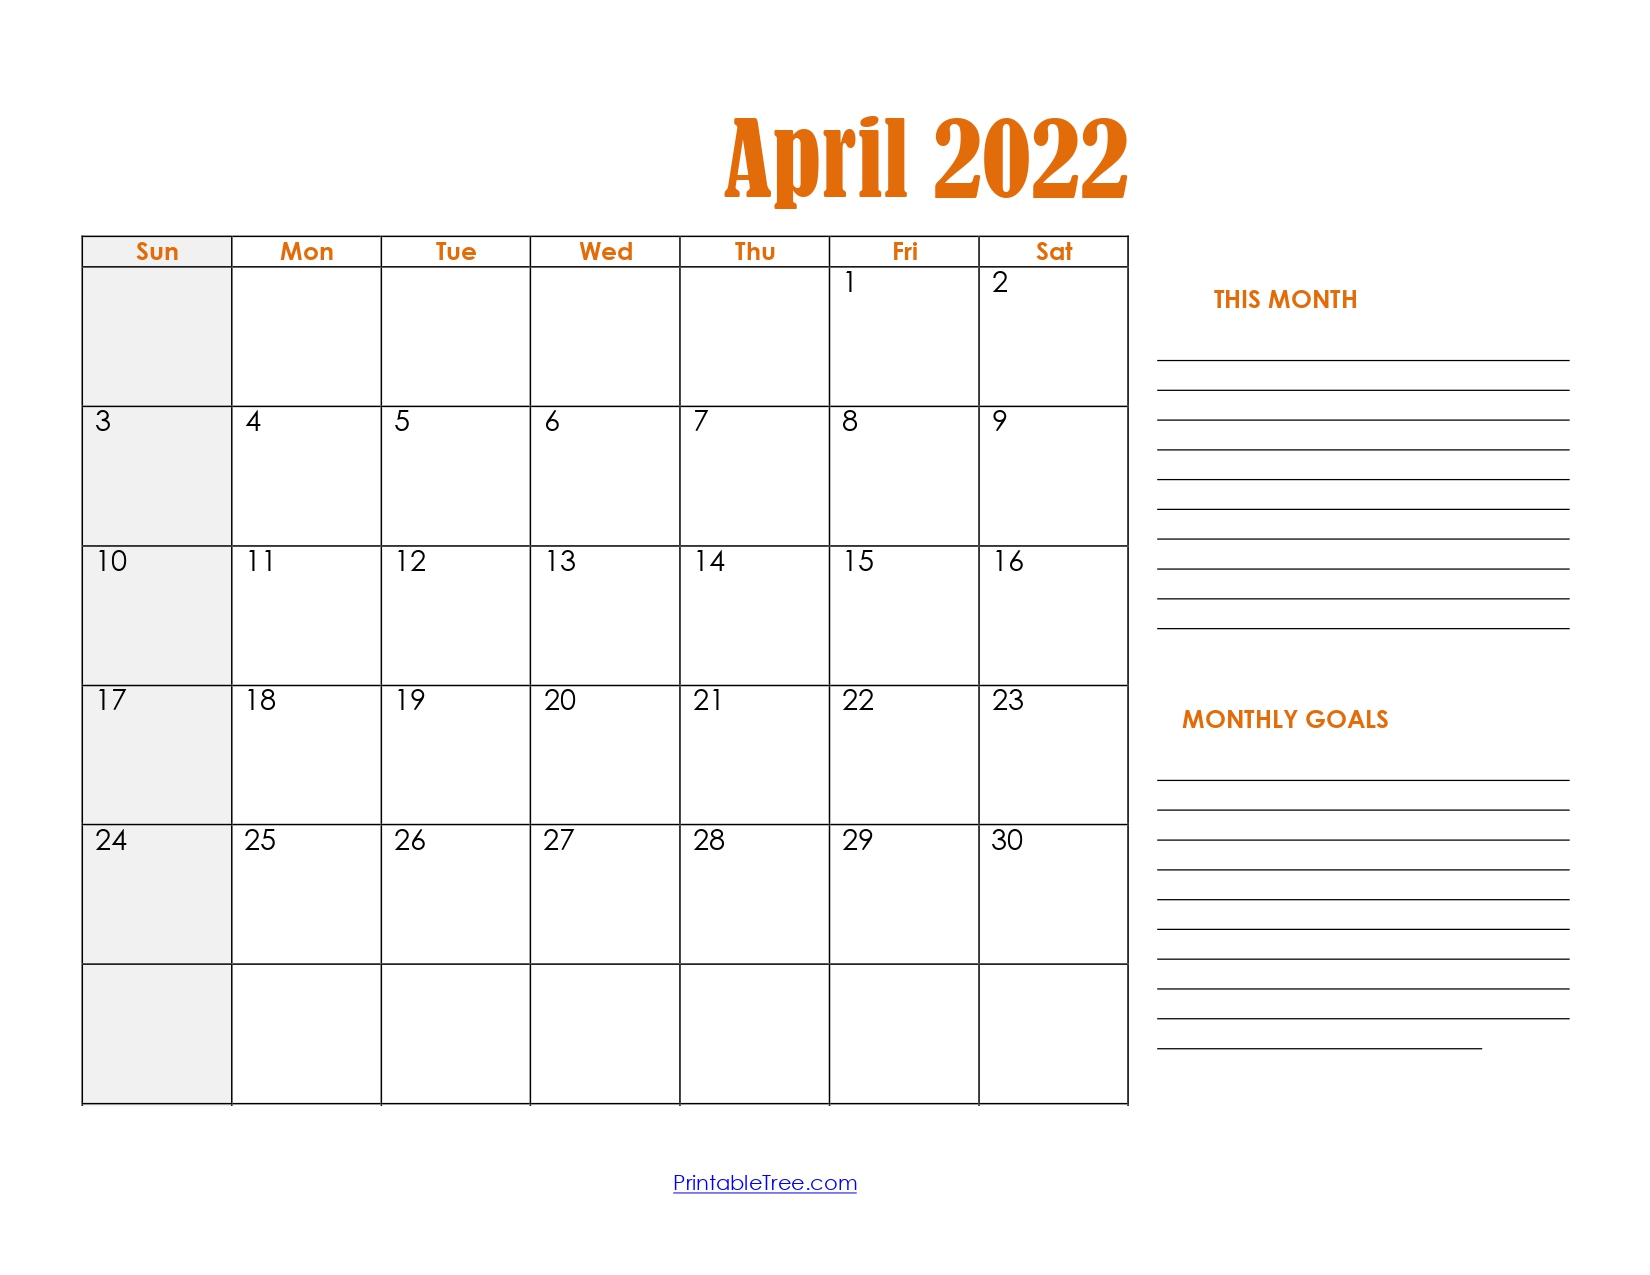 April 2022 Calendar with Goals